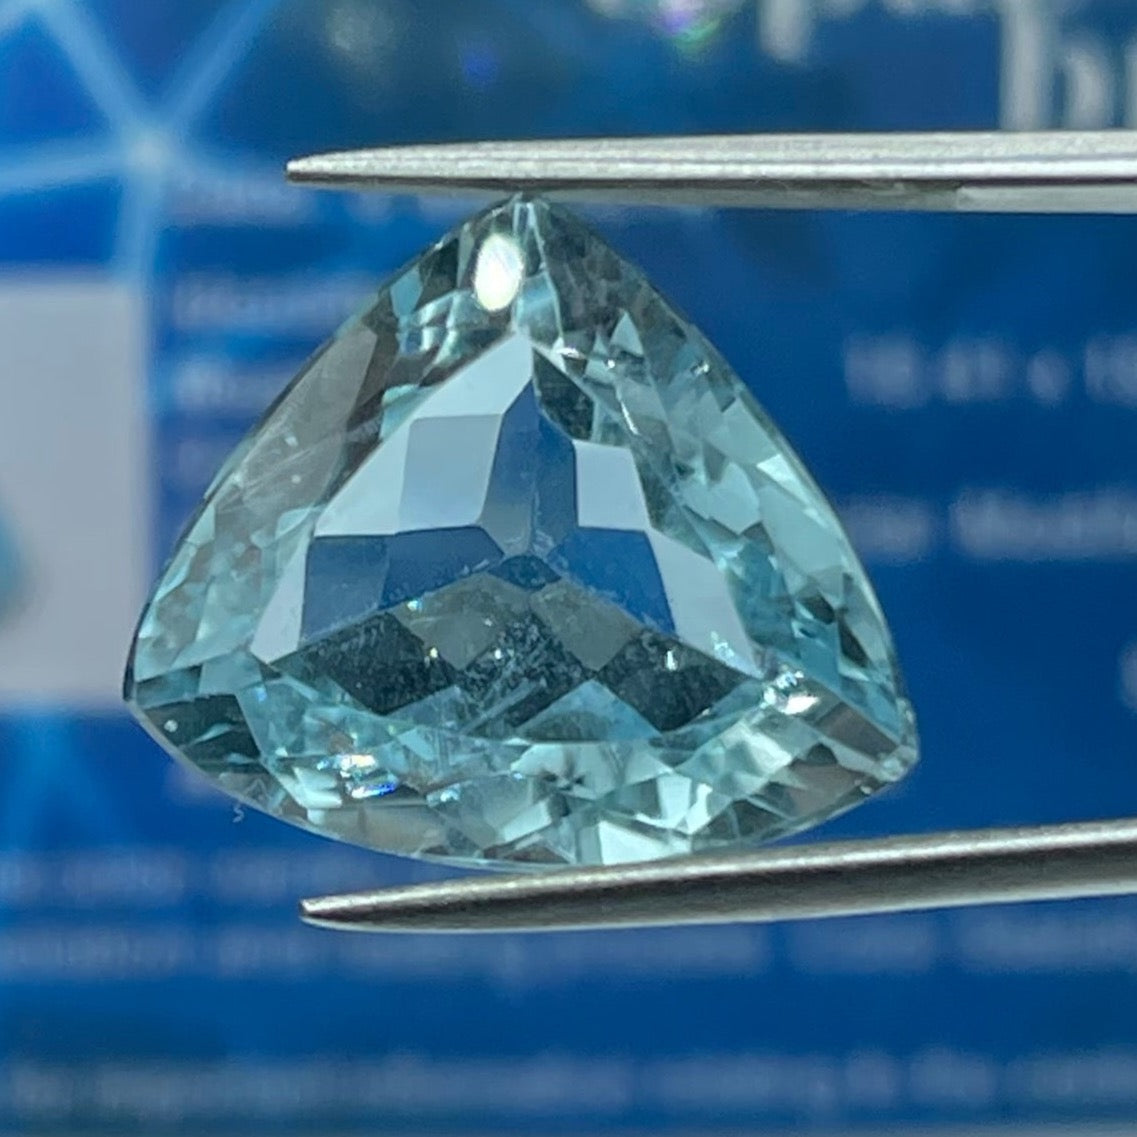 AGL Certified Paraiba Color Natural Blue Topaz Trillion Cut Loose Gemstone (16.14 x 19.52 x 8.03 MM